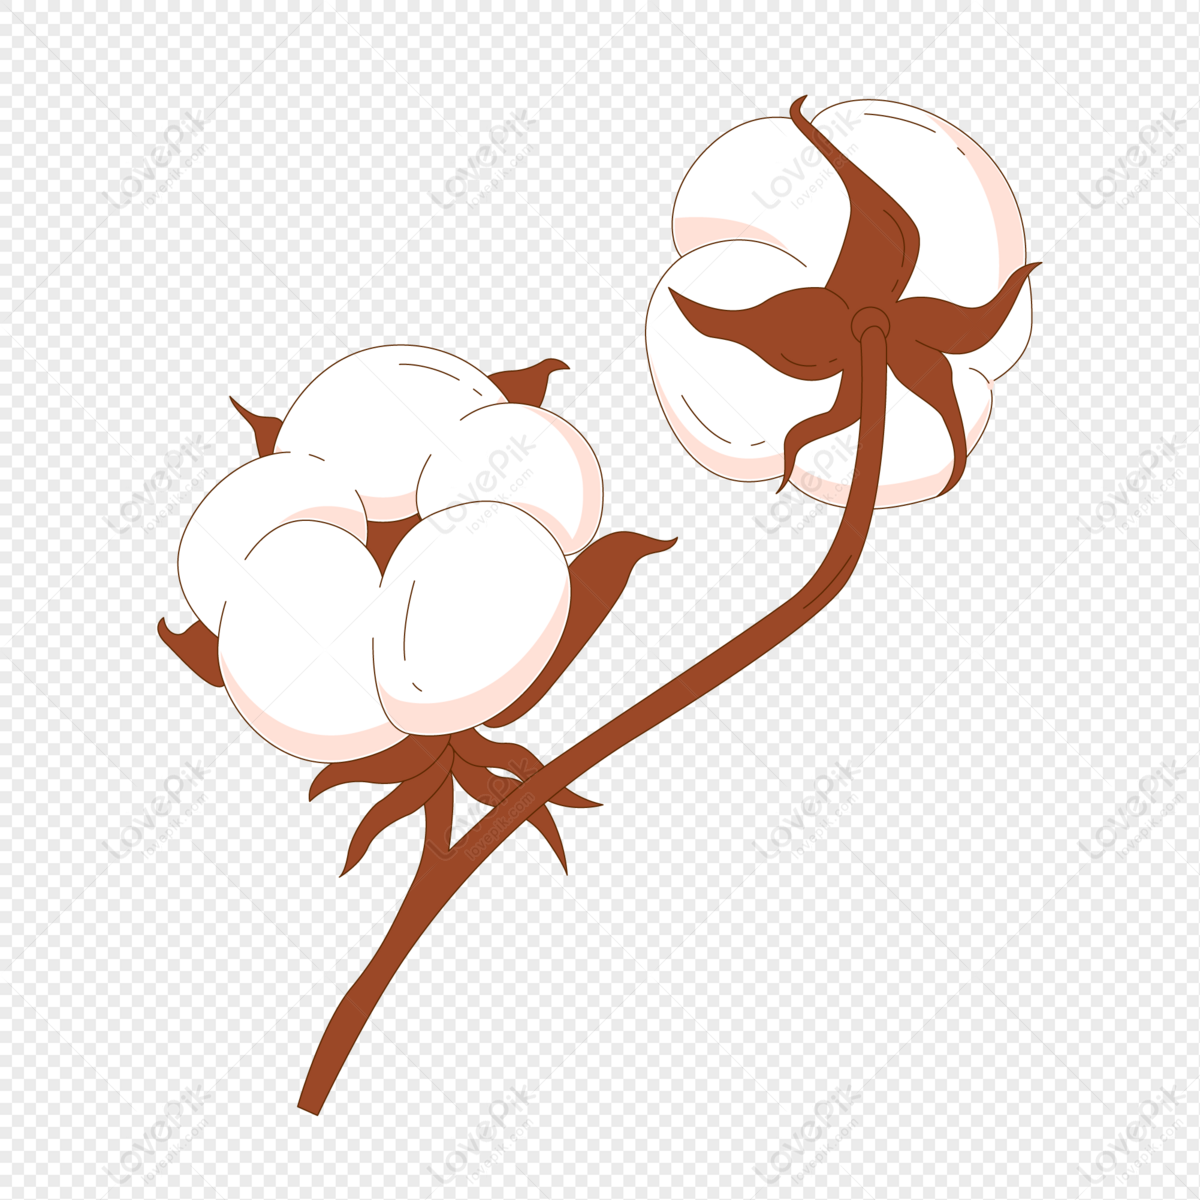 Cotton, Cotton Logo, Cotton Material, Illustration Cotton PNG Image And ...